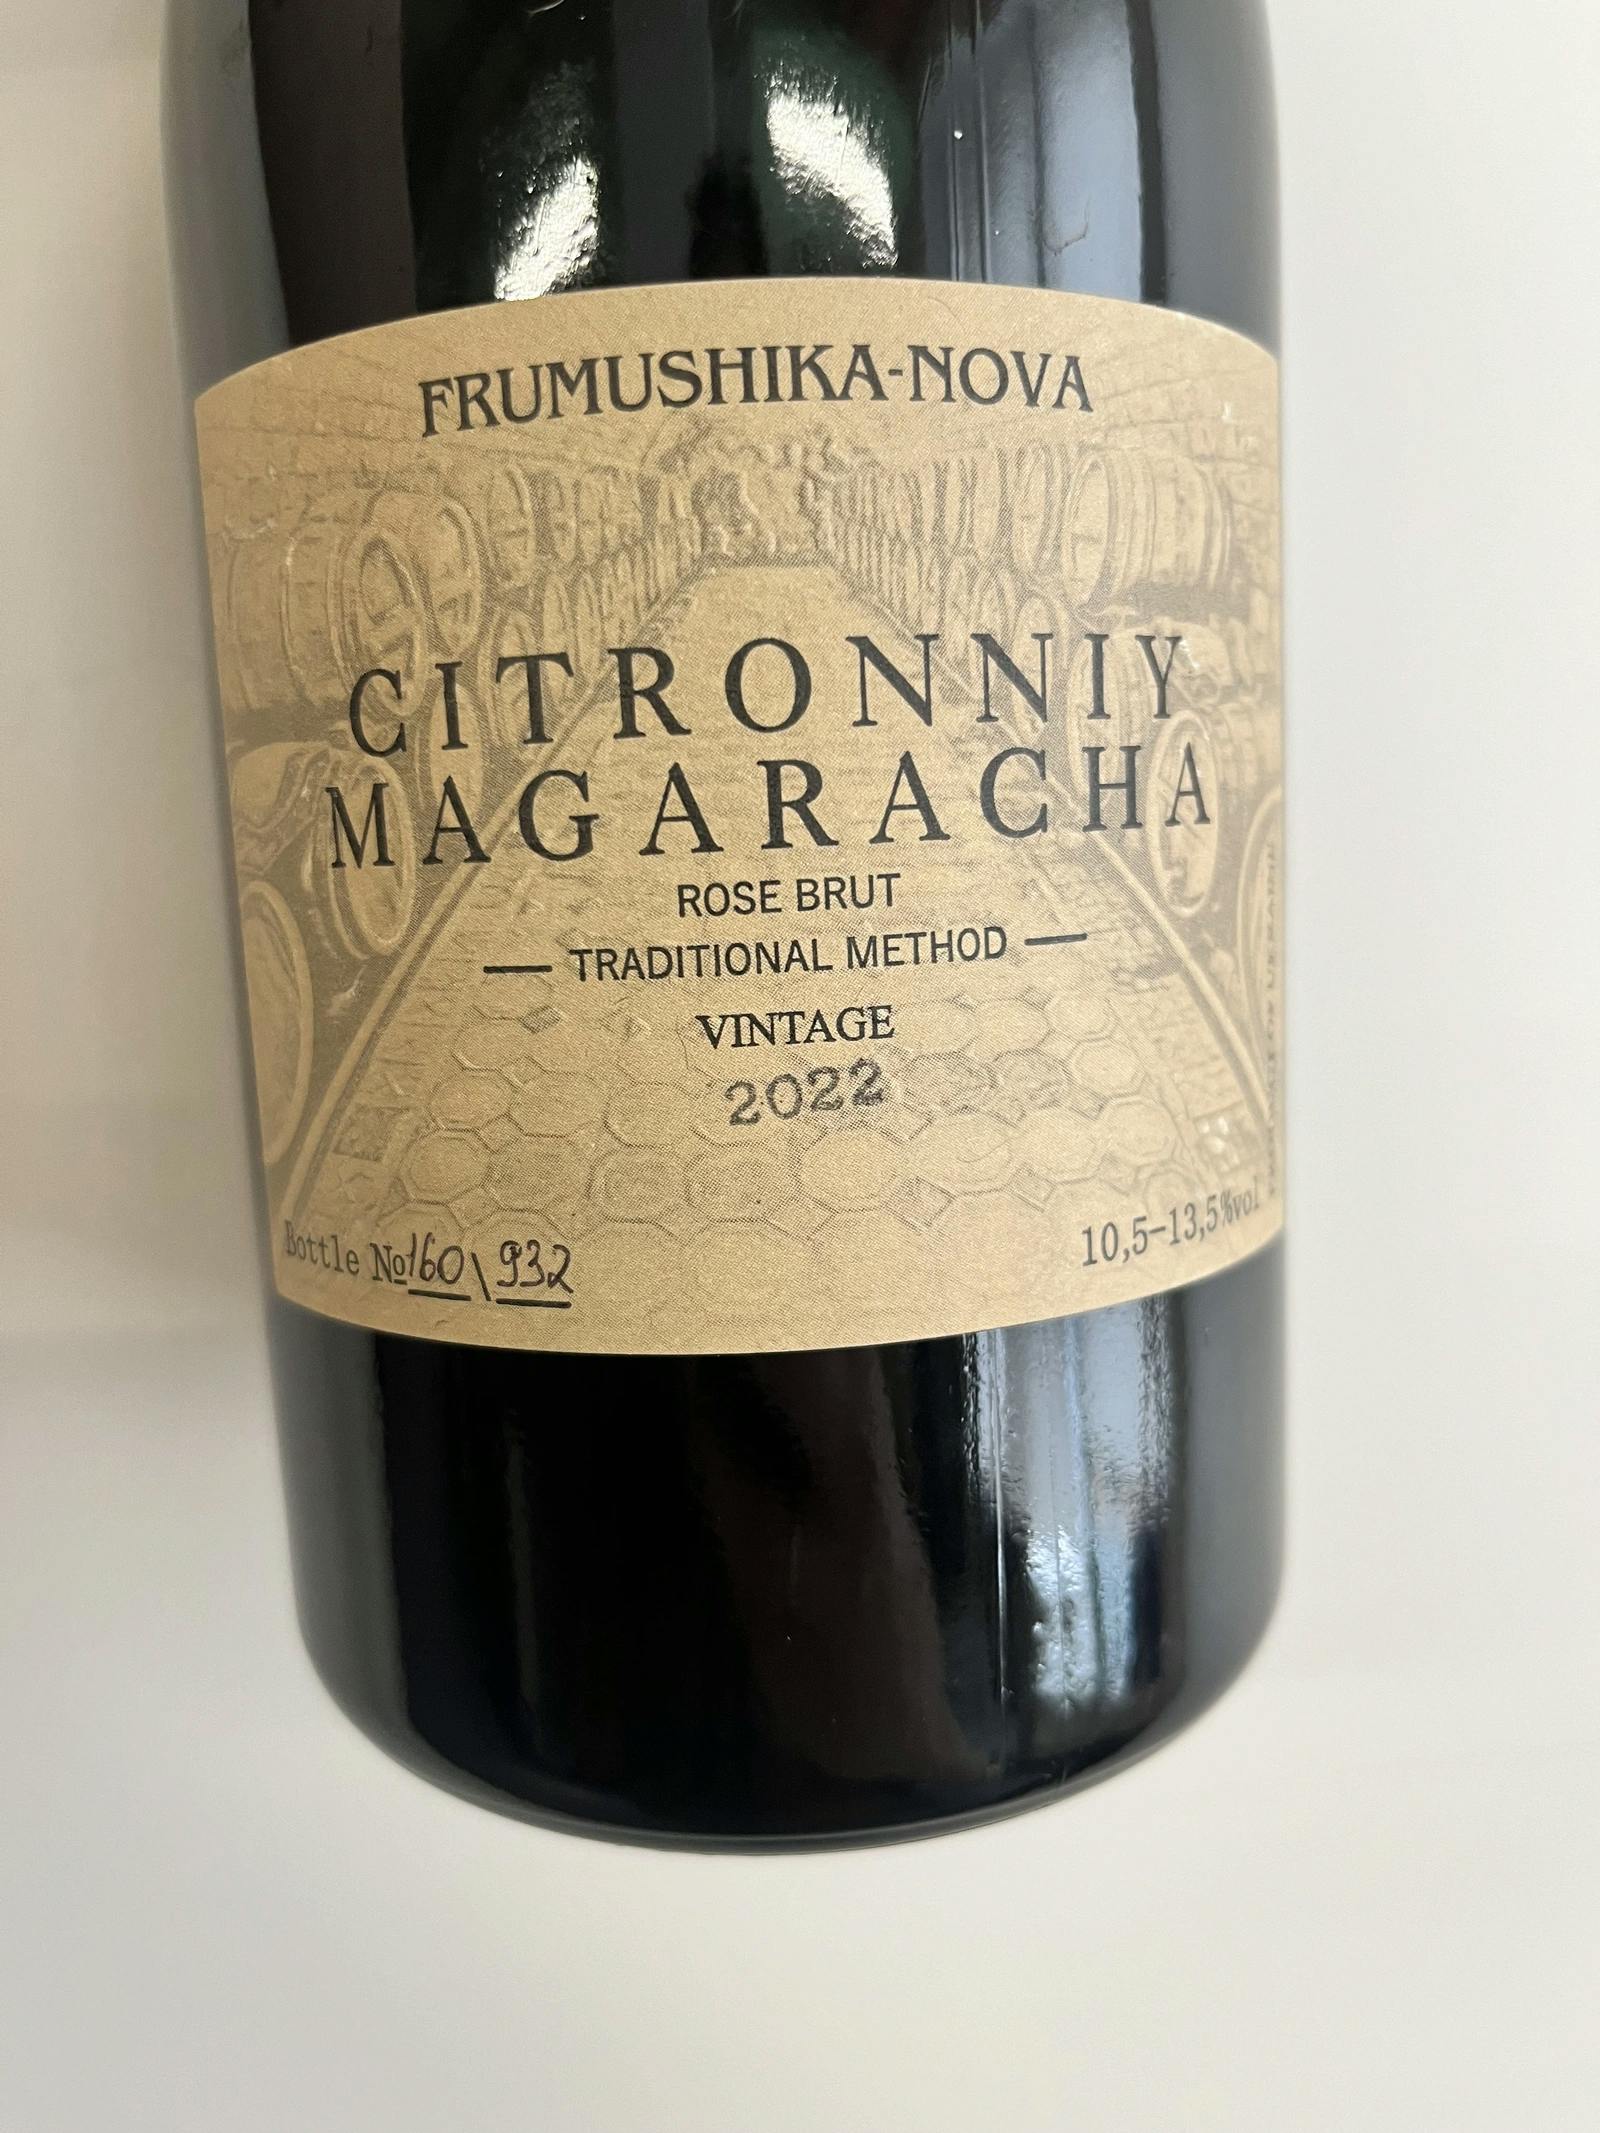 Frumushika-Nova Citronniy Magaracha Rose Brut Traditional Method 2022